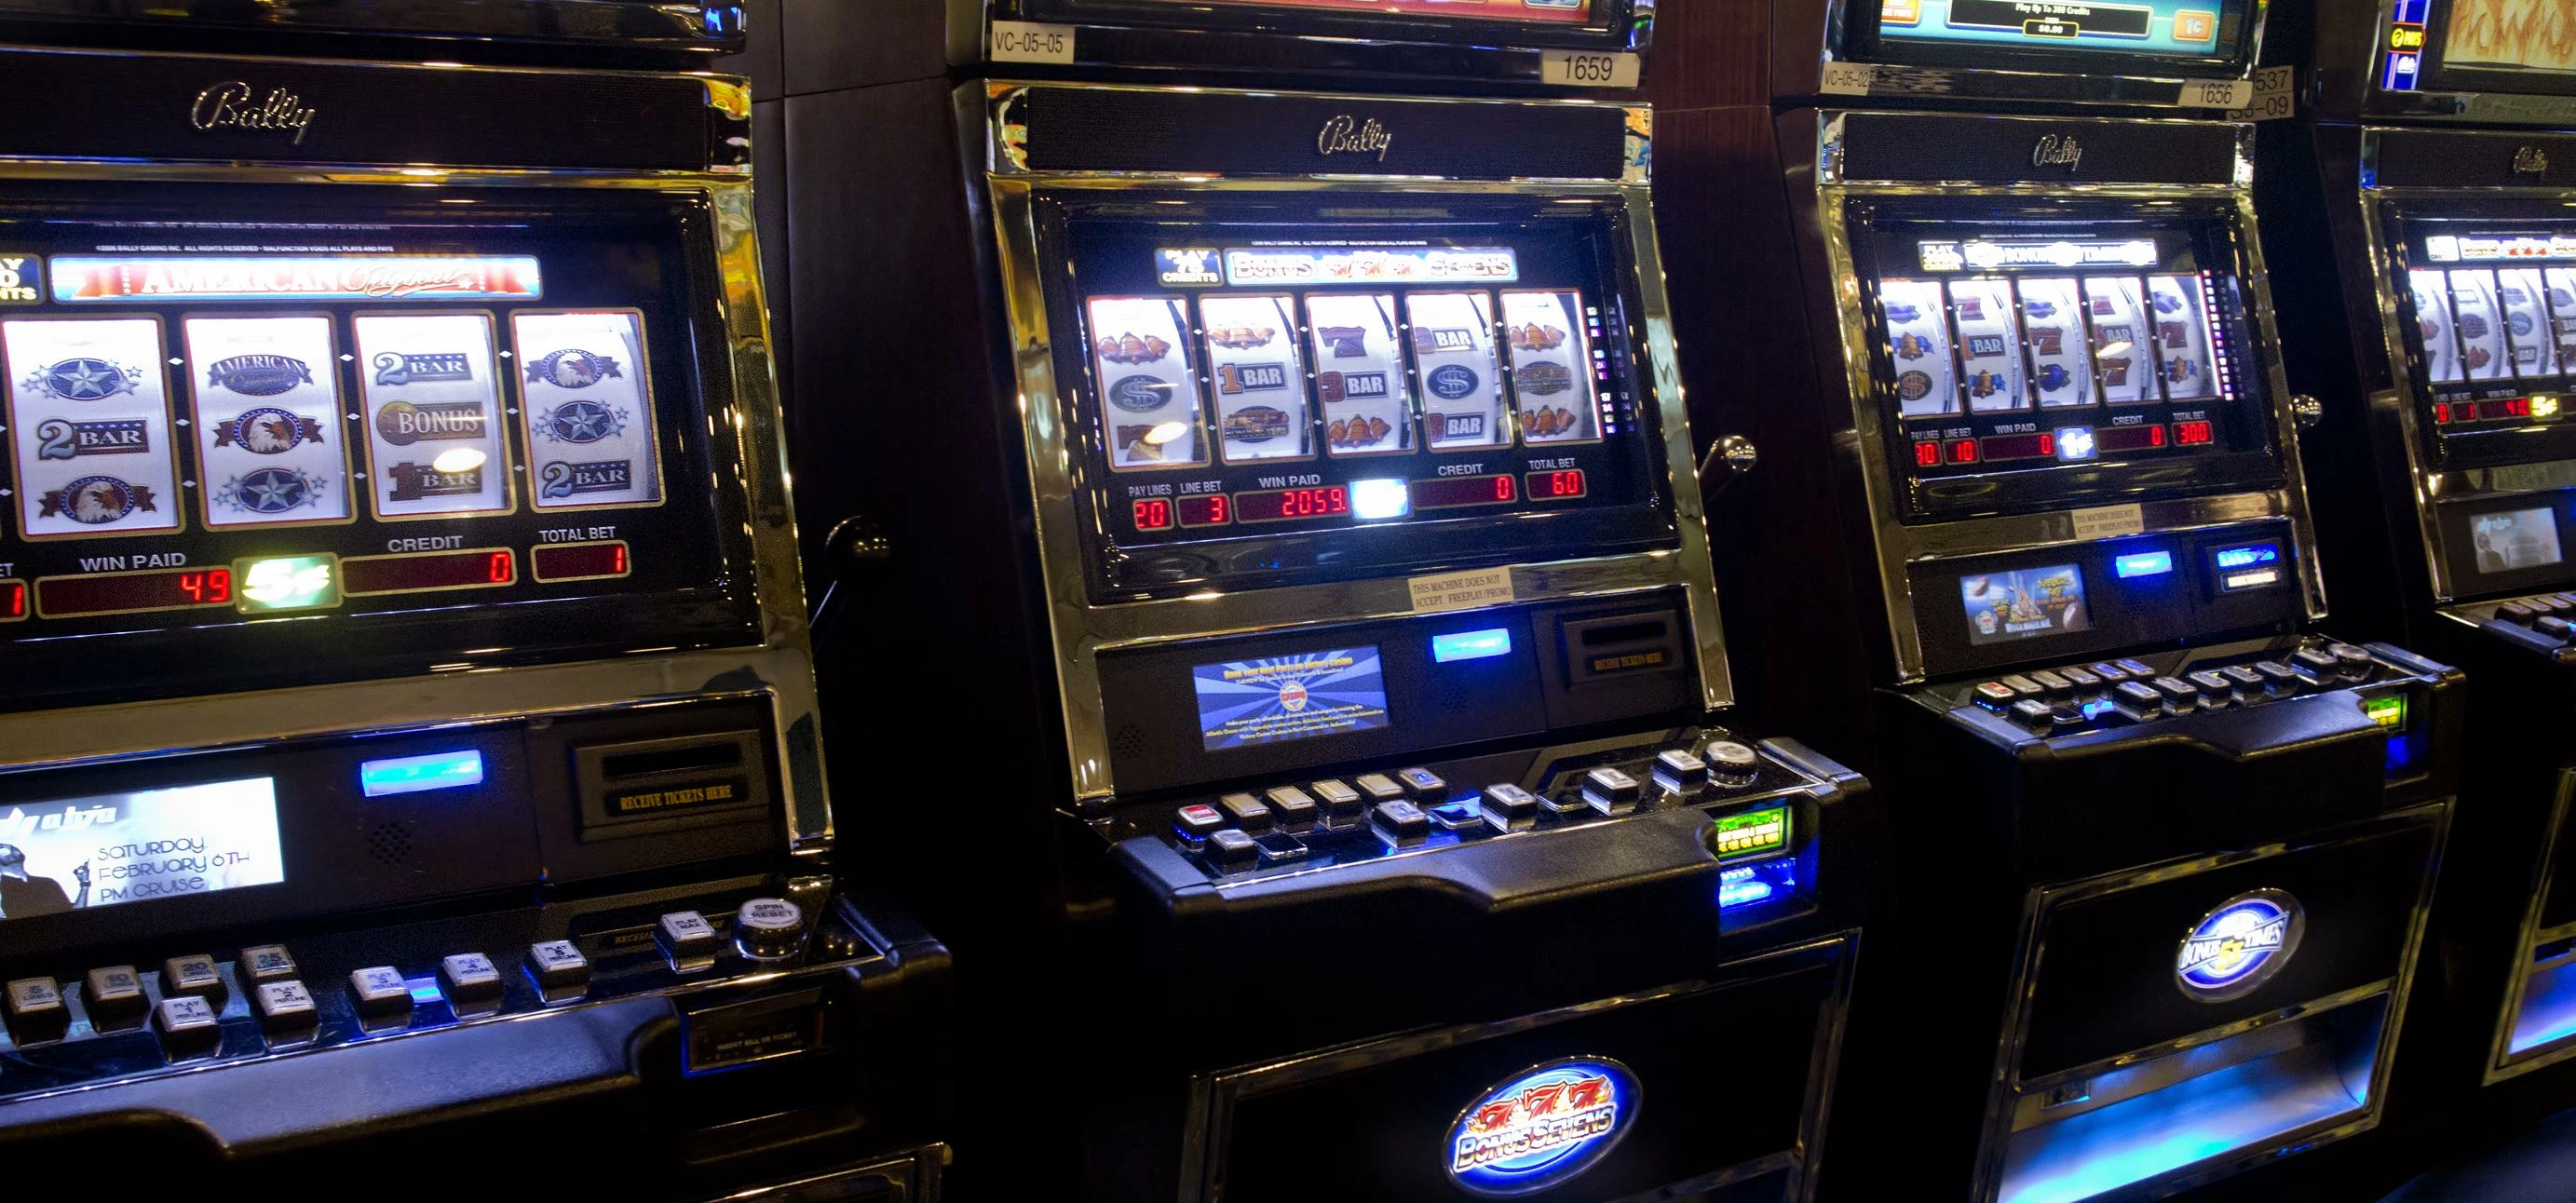 Slot machines gambling gaming casino